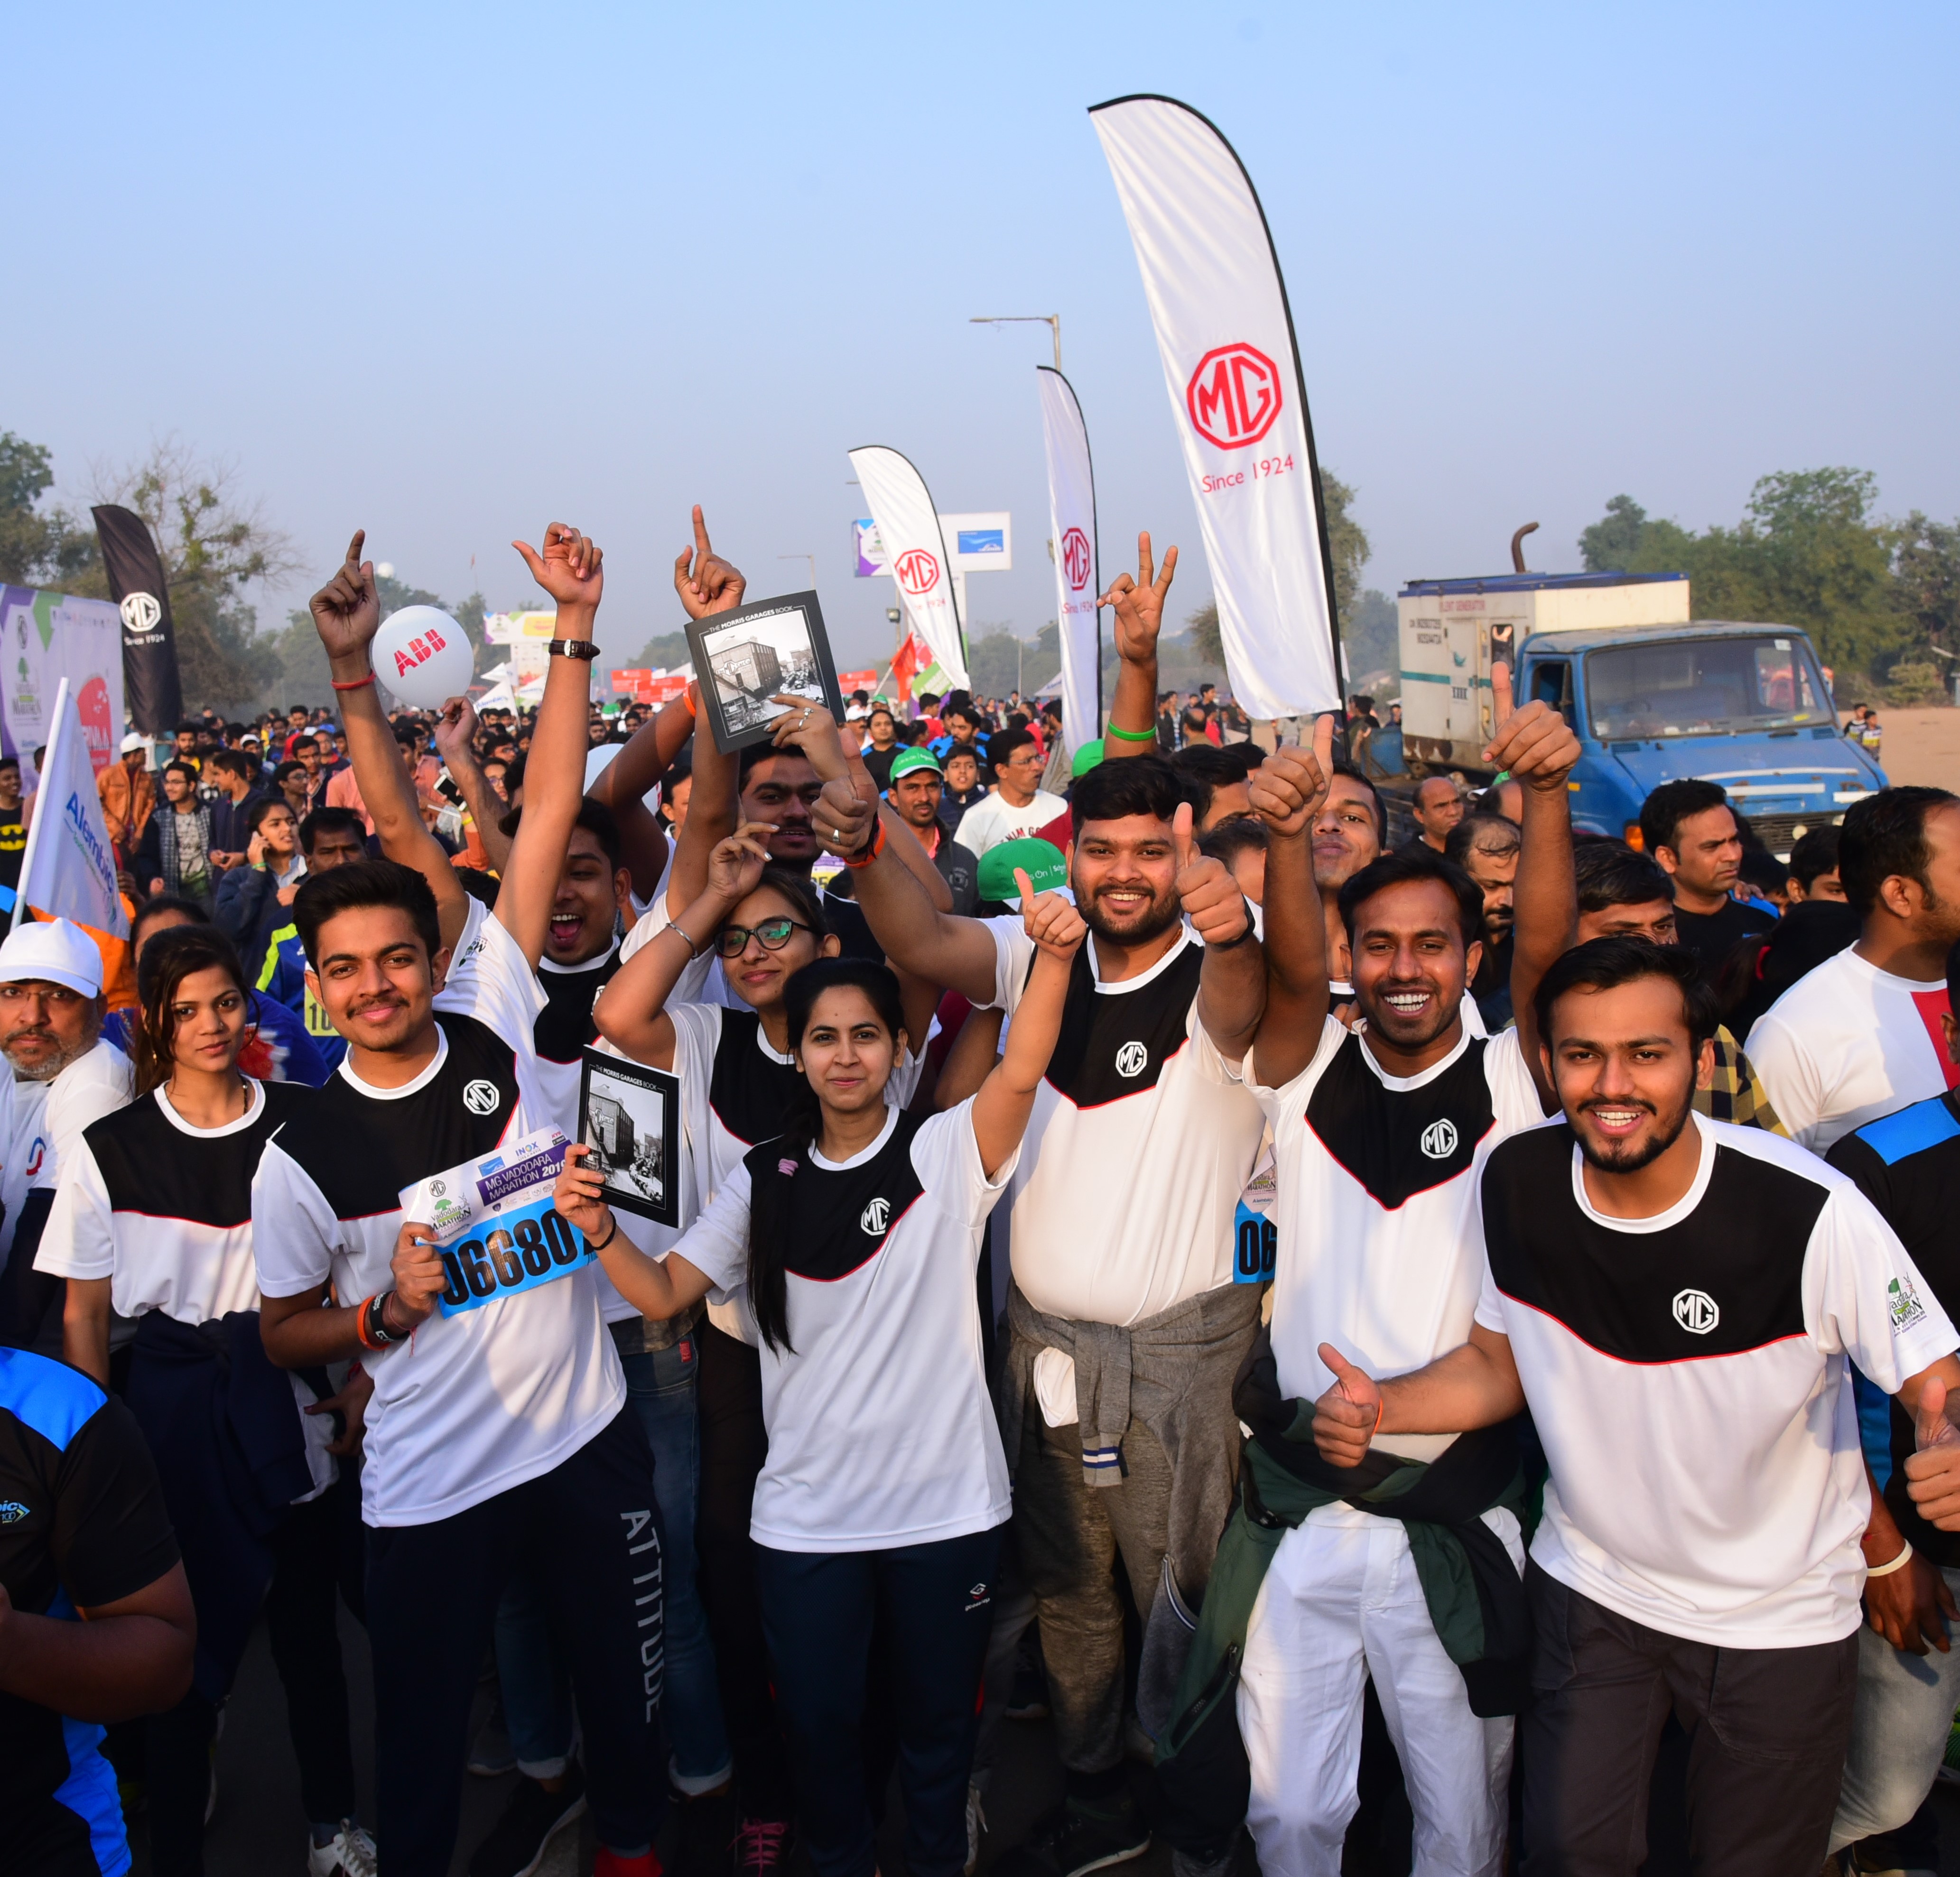 800 employees of MG Motor India participated in the MG Vadodara International Marathon